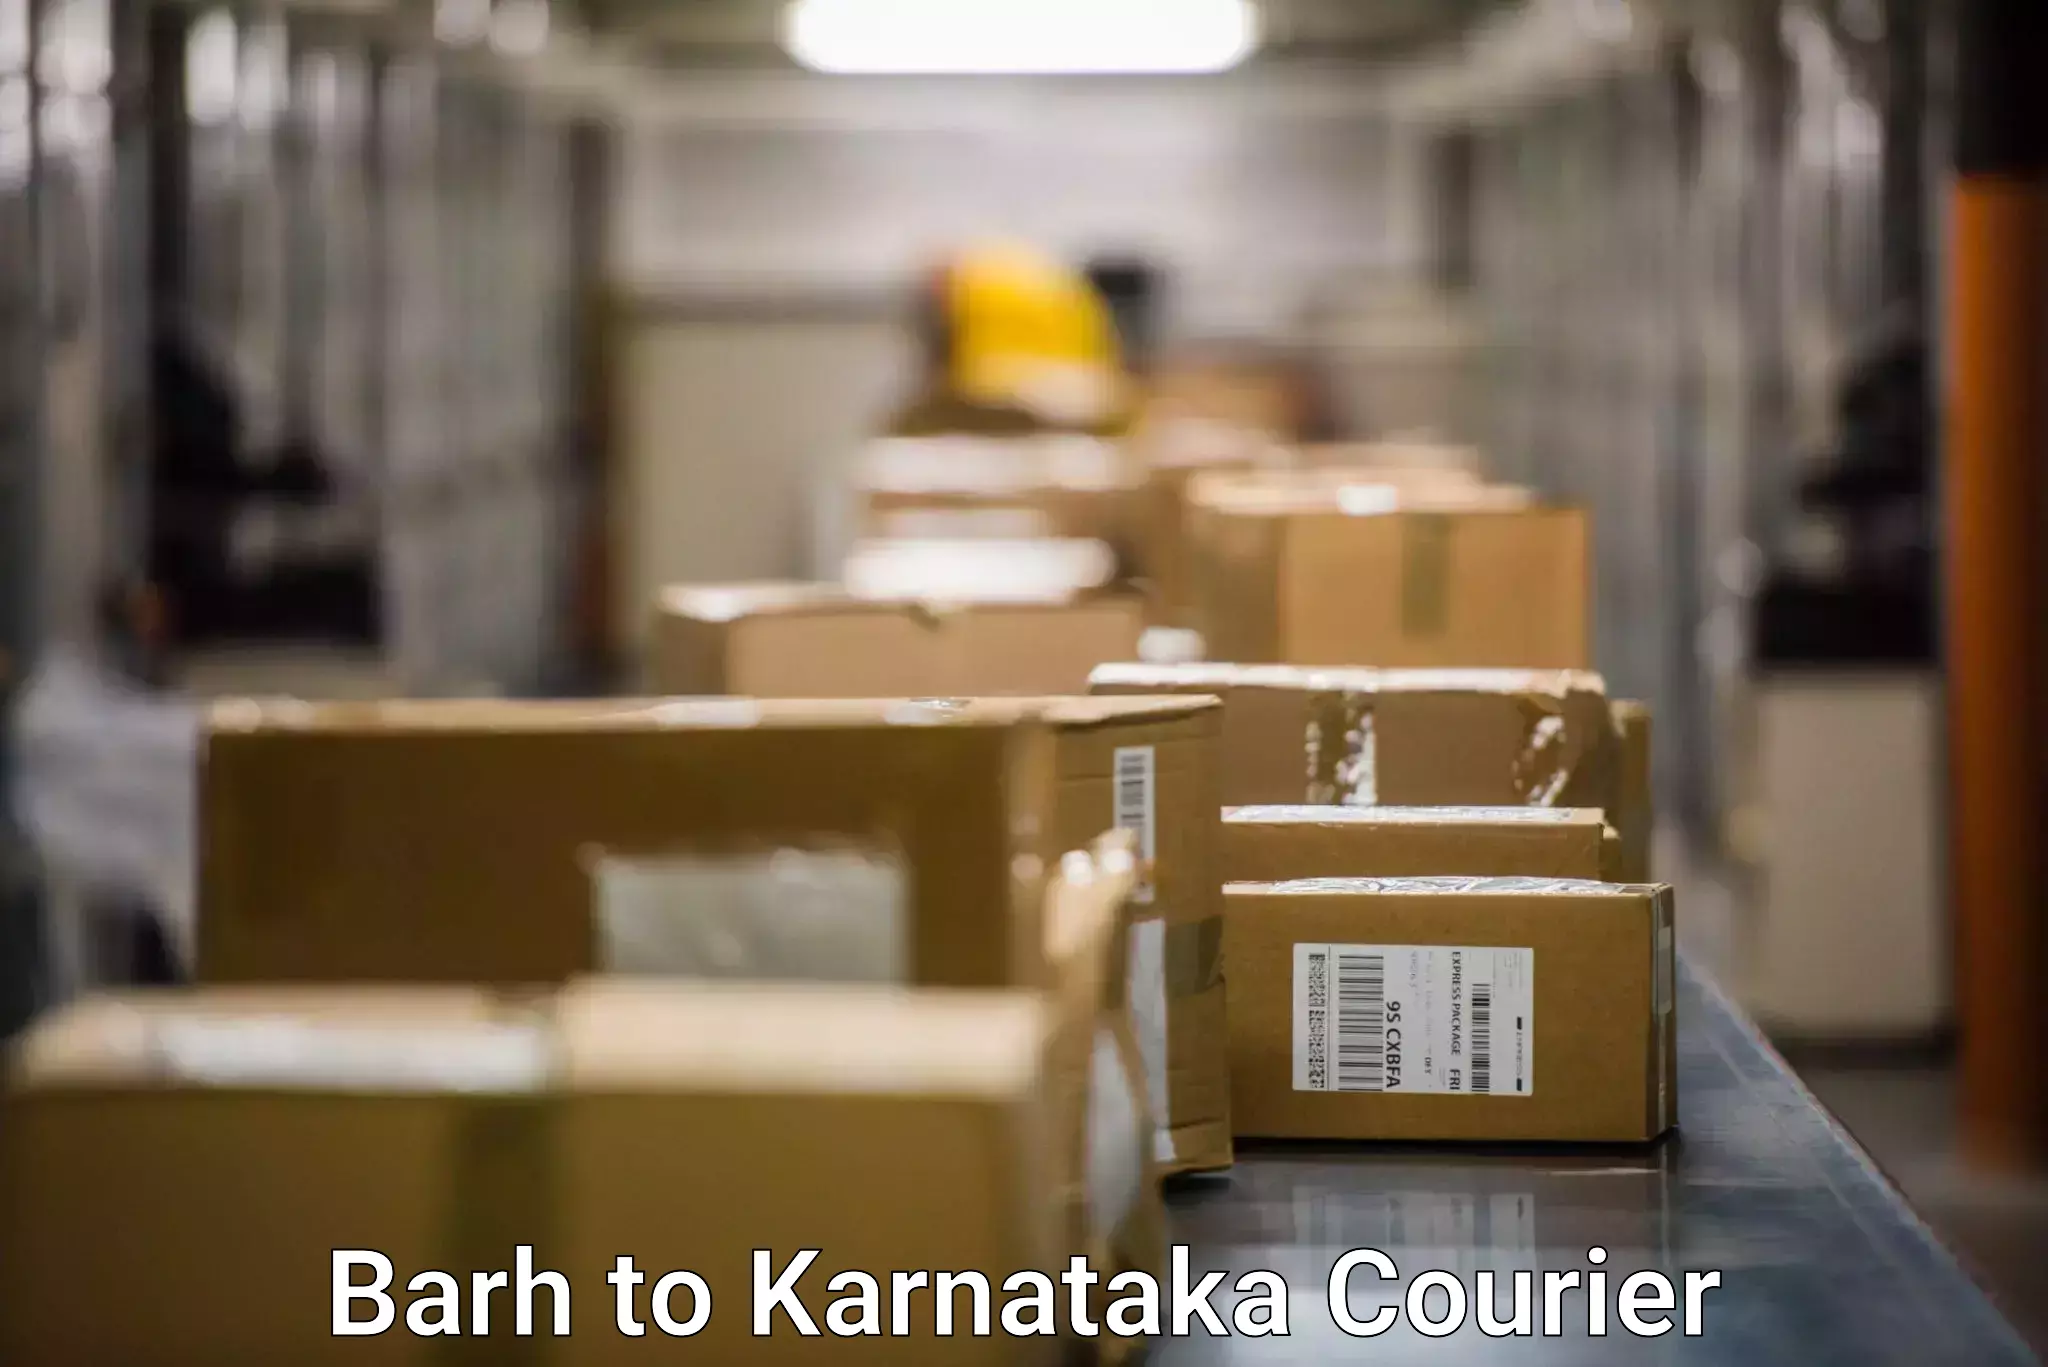 Courier service comparison in Barh to Karnataka